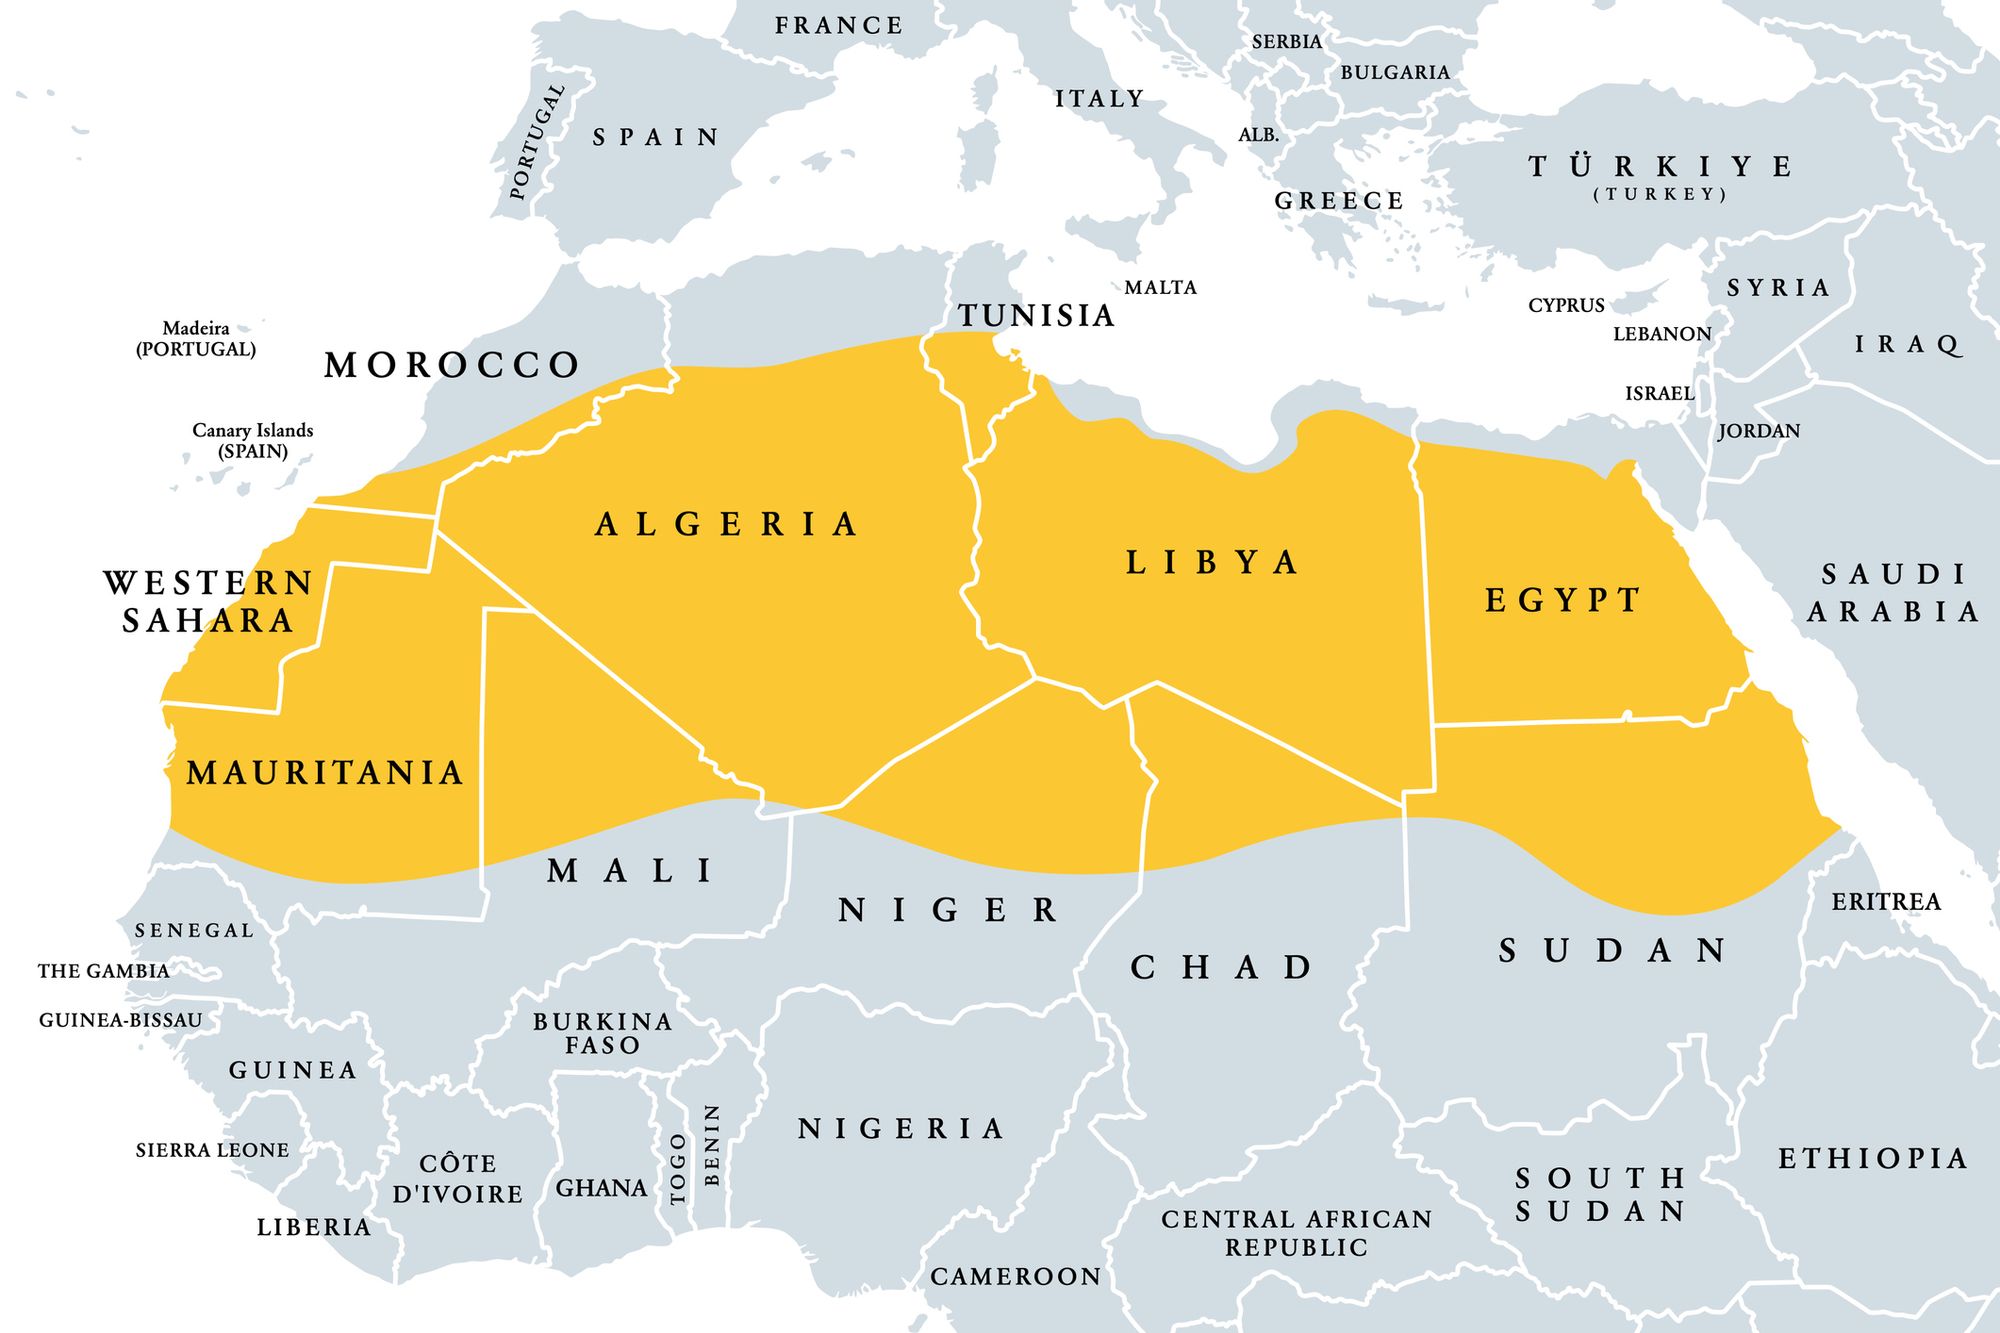 Sahara Desert Map